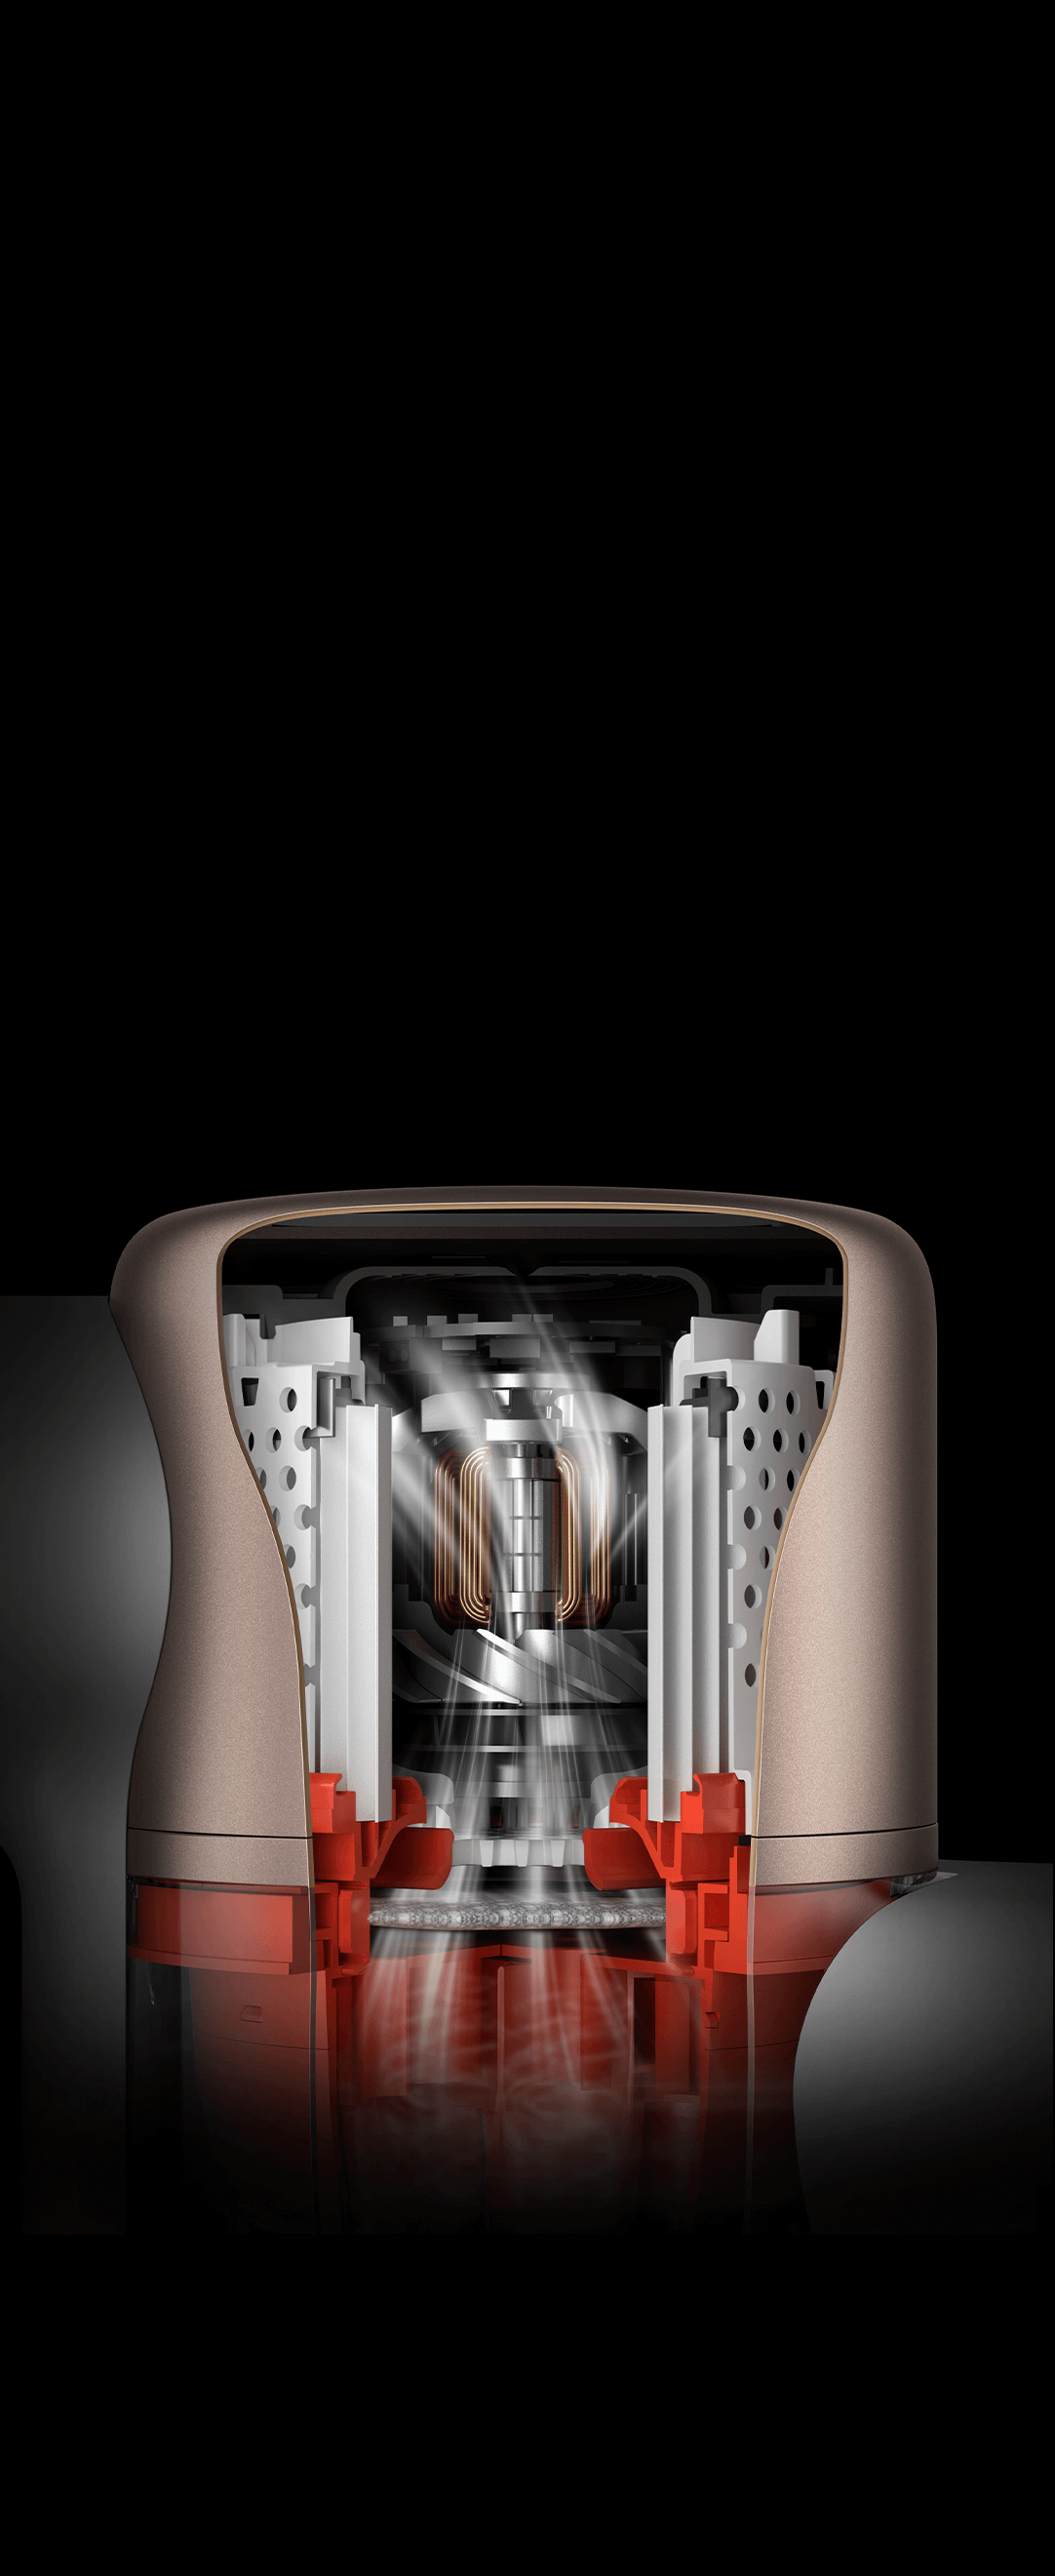 Aspiradora inalámbrica Xiaomi Mi Vacuum Cleaner G10 por 189,00€